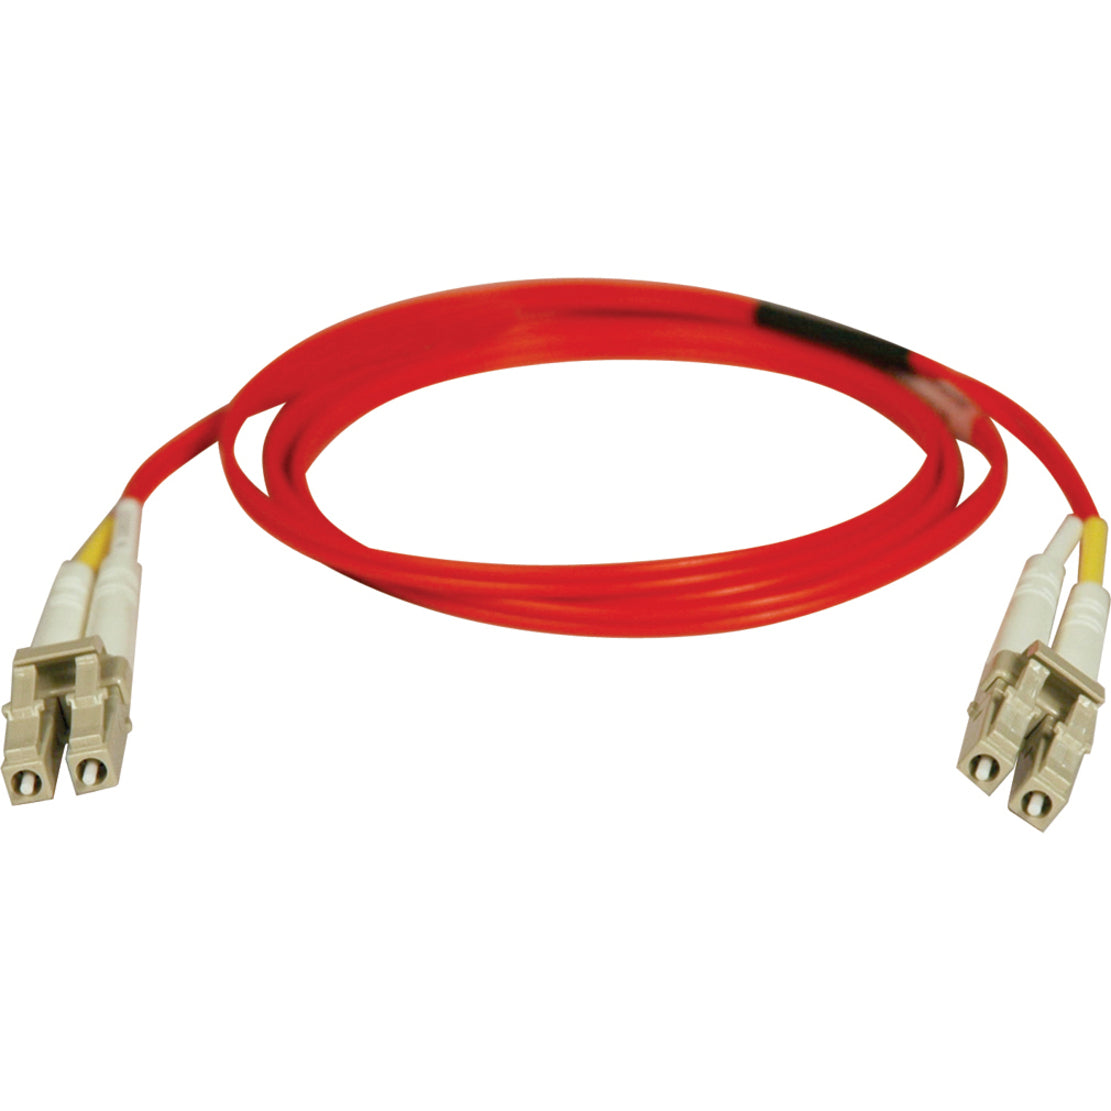 Tripp Lite N320-03M-RD Fiber Optic Duplex Patch Cable, 10 ft, Red Jacket